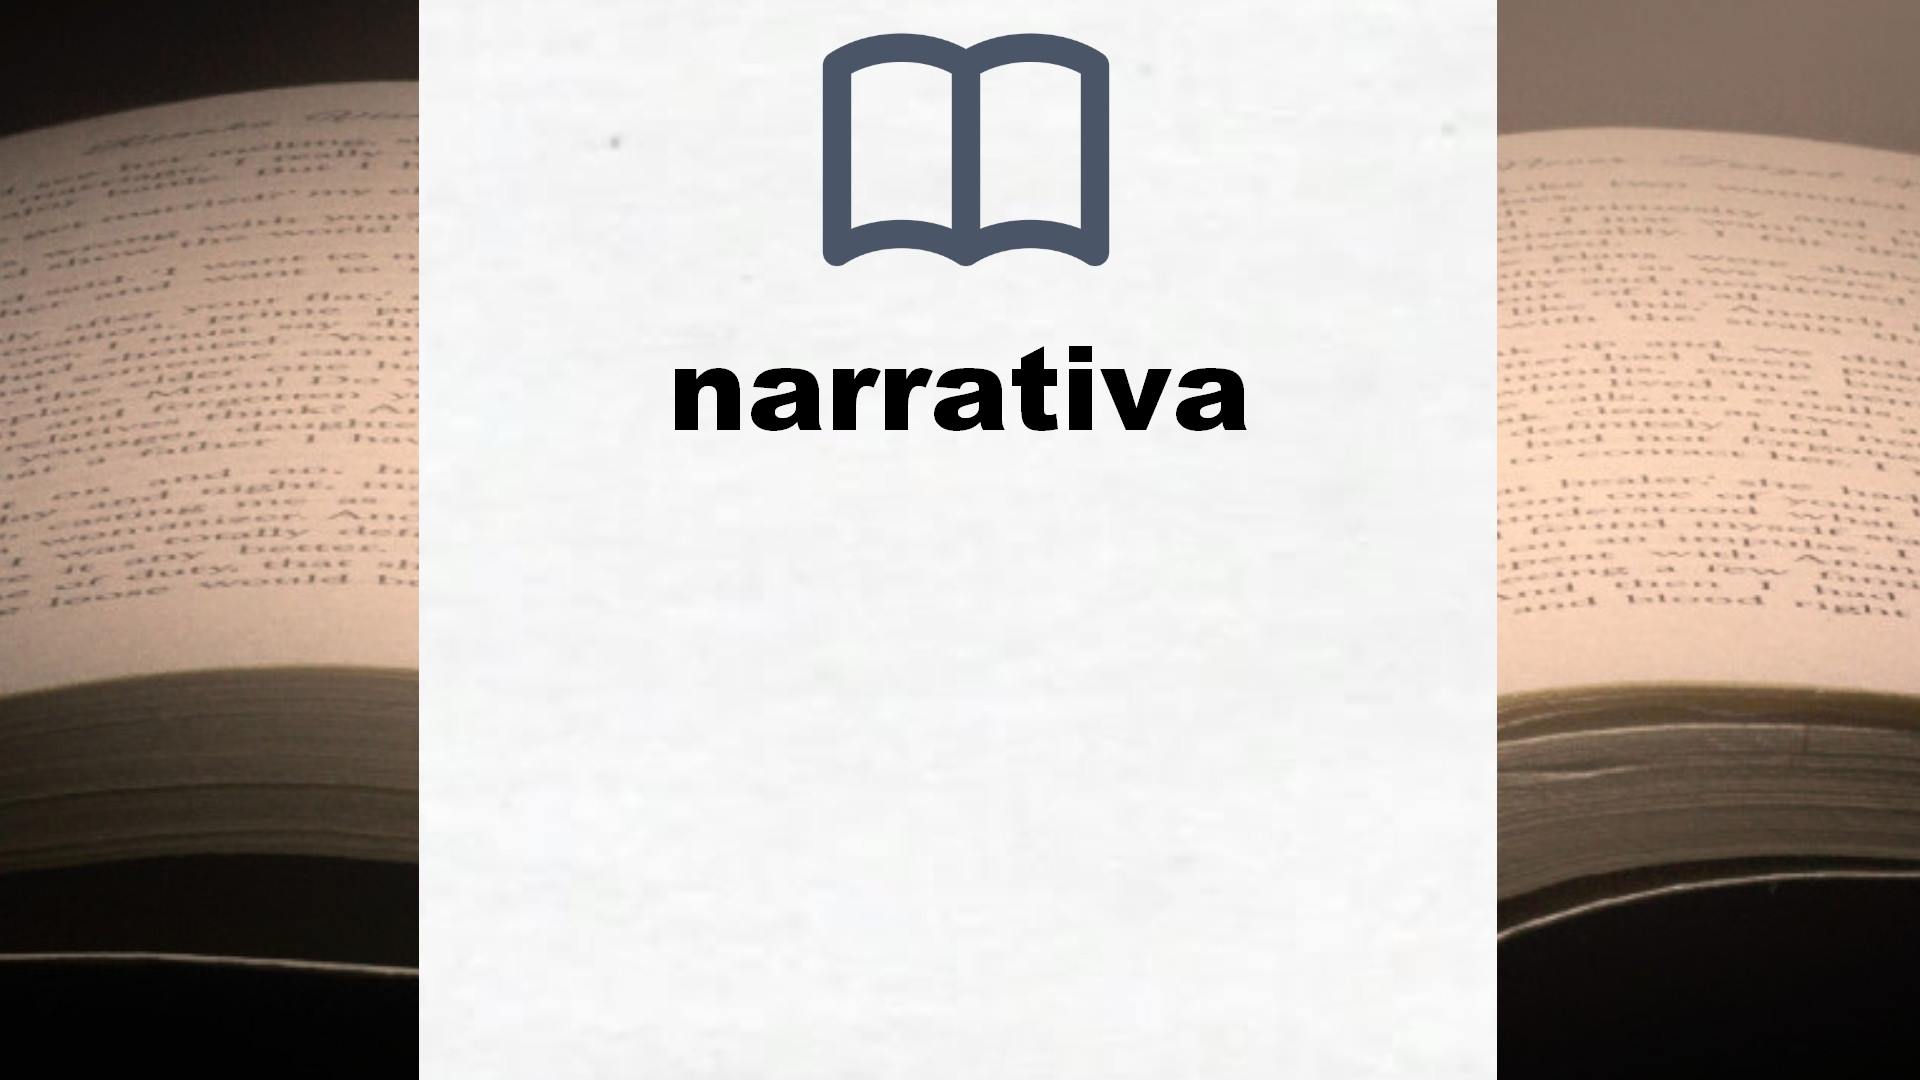 Libros sobre narrativa